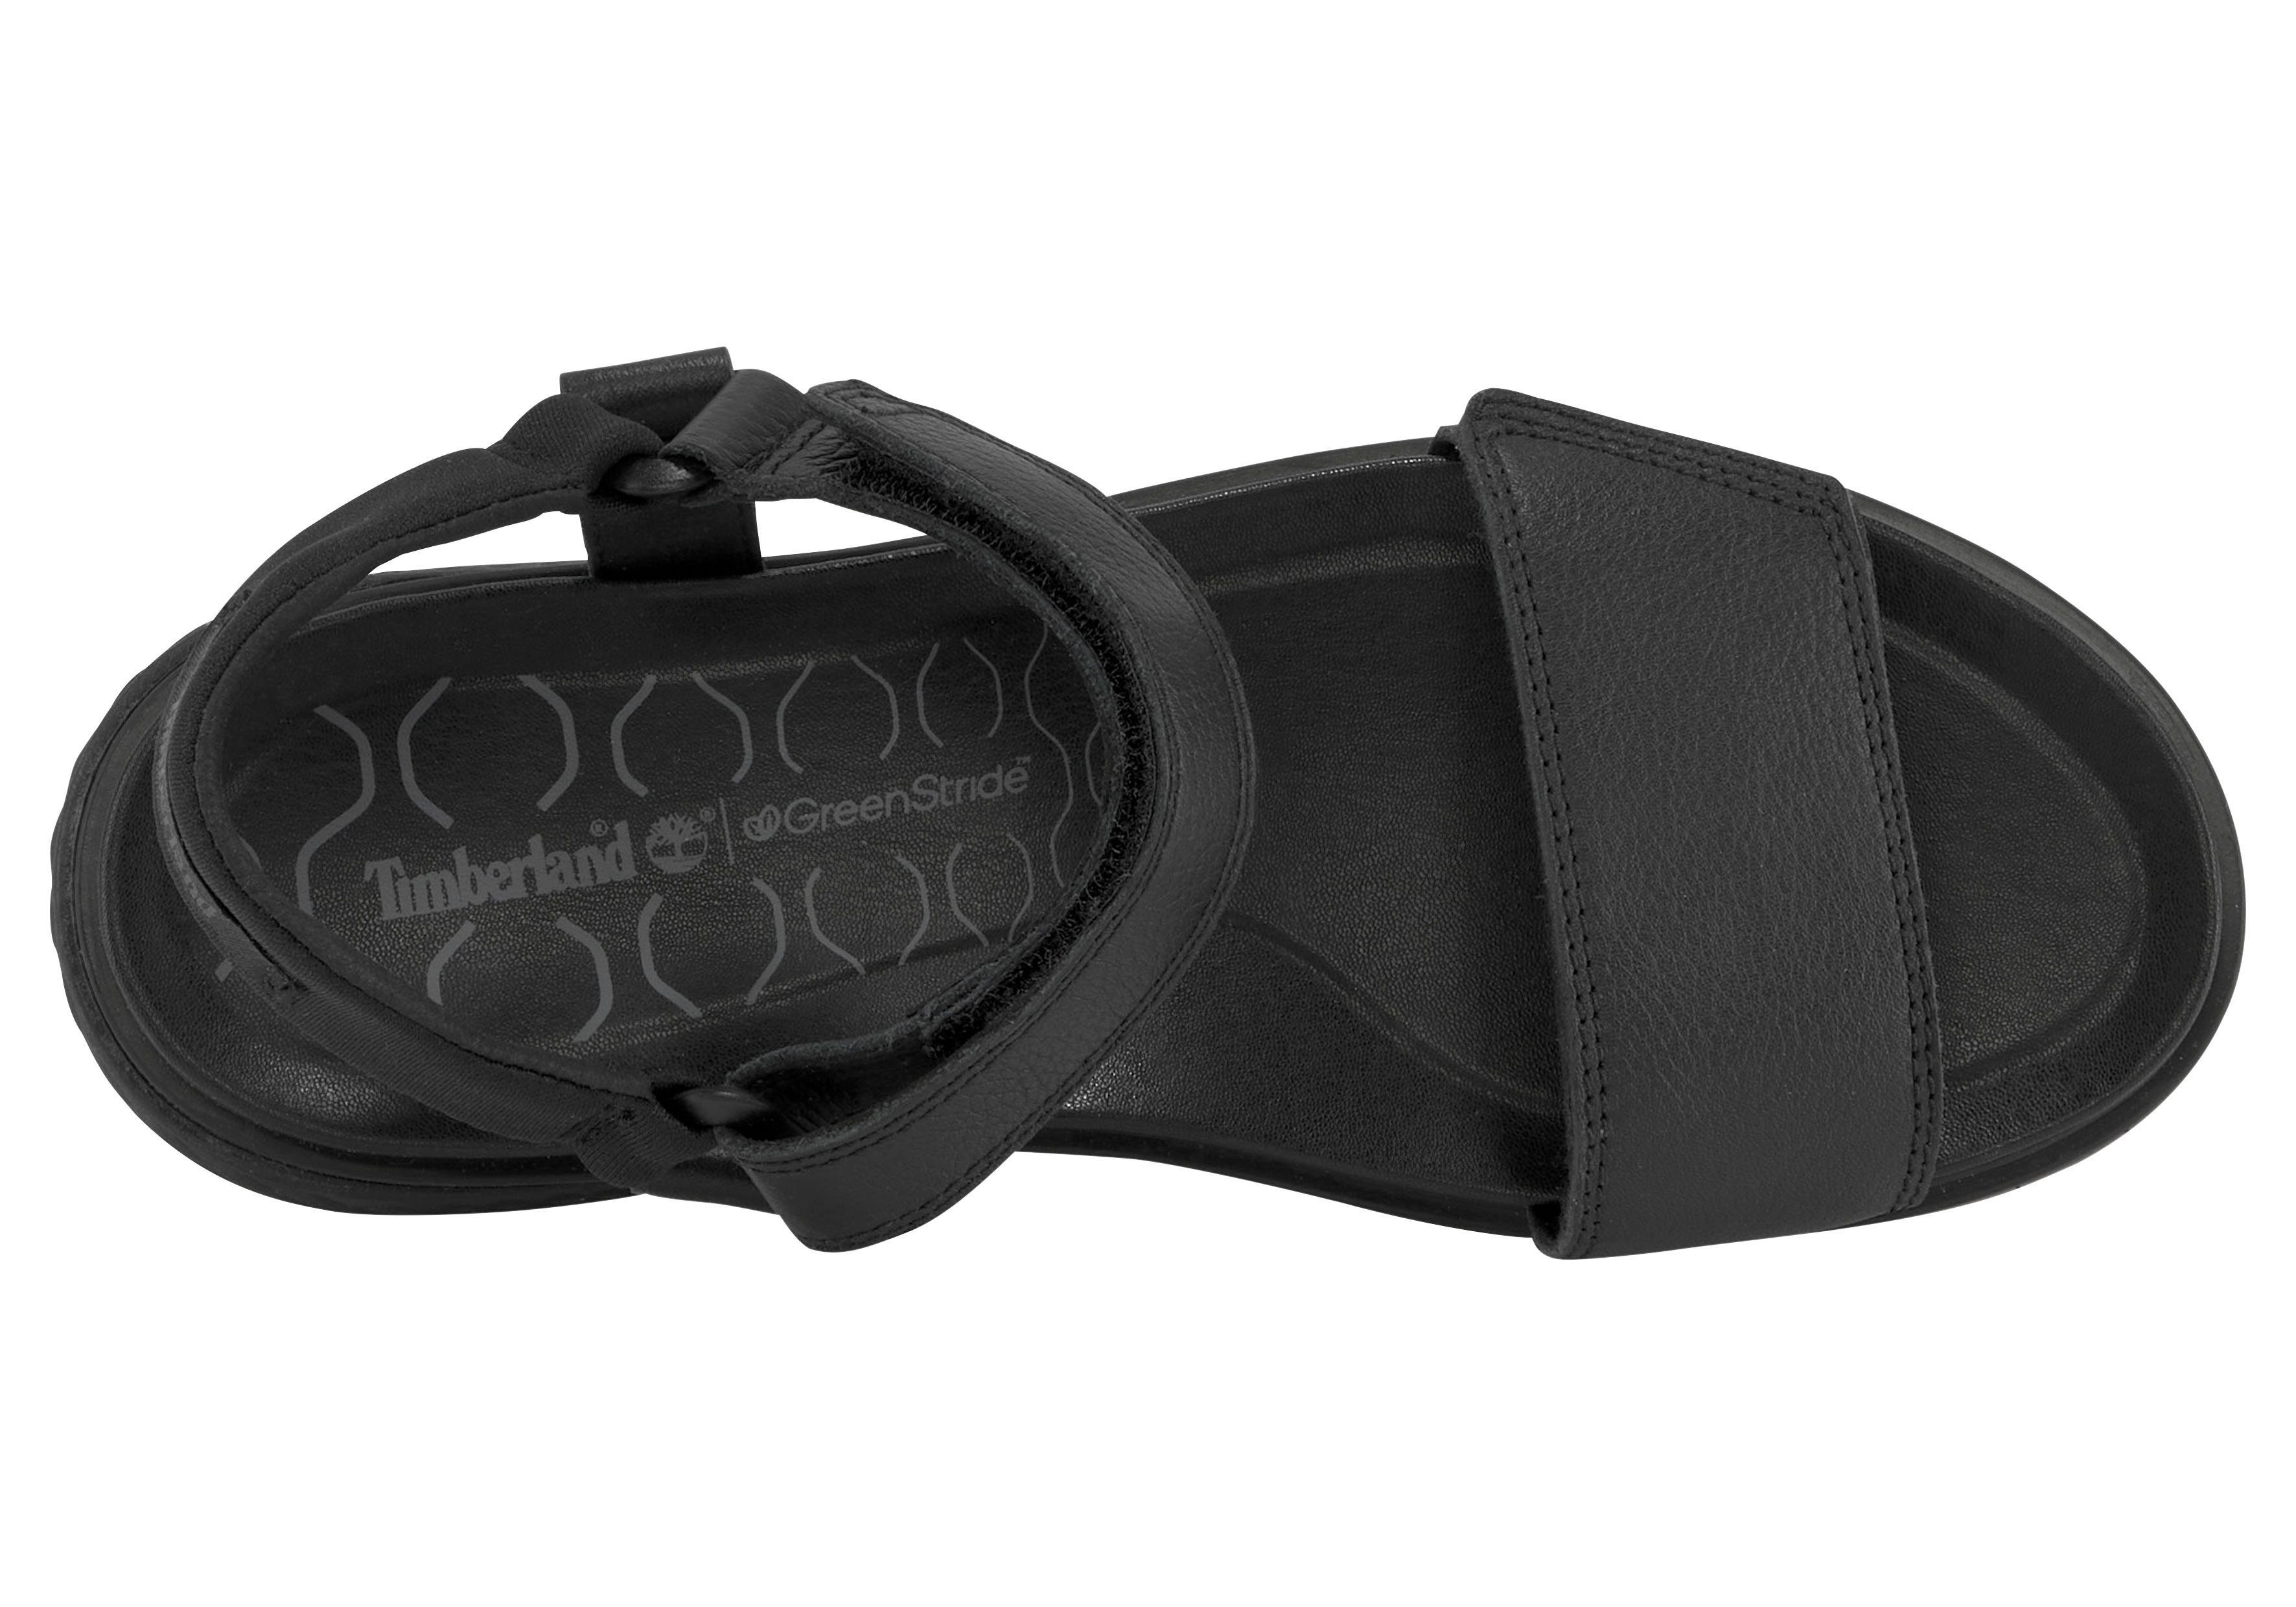 Timberland Ray Sandal Klettverschluss Velcro City mit Sandale schwarz